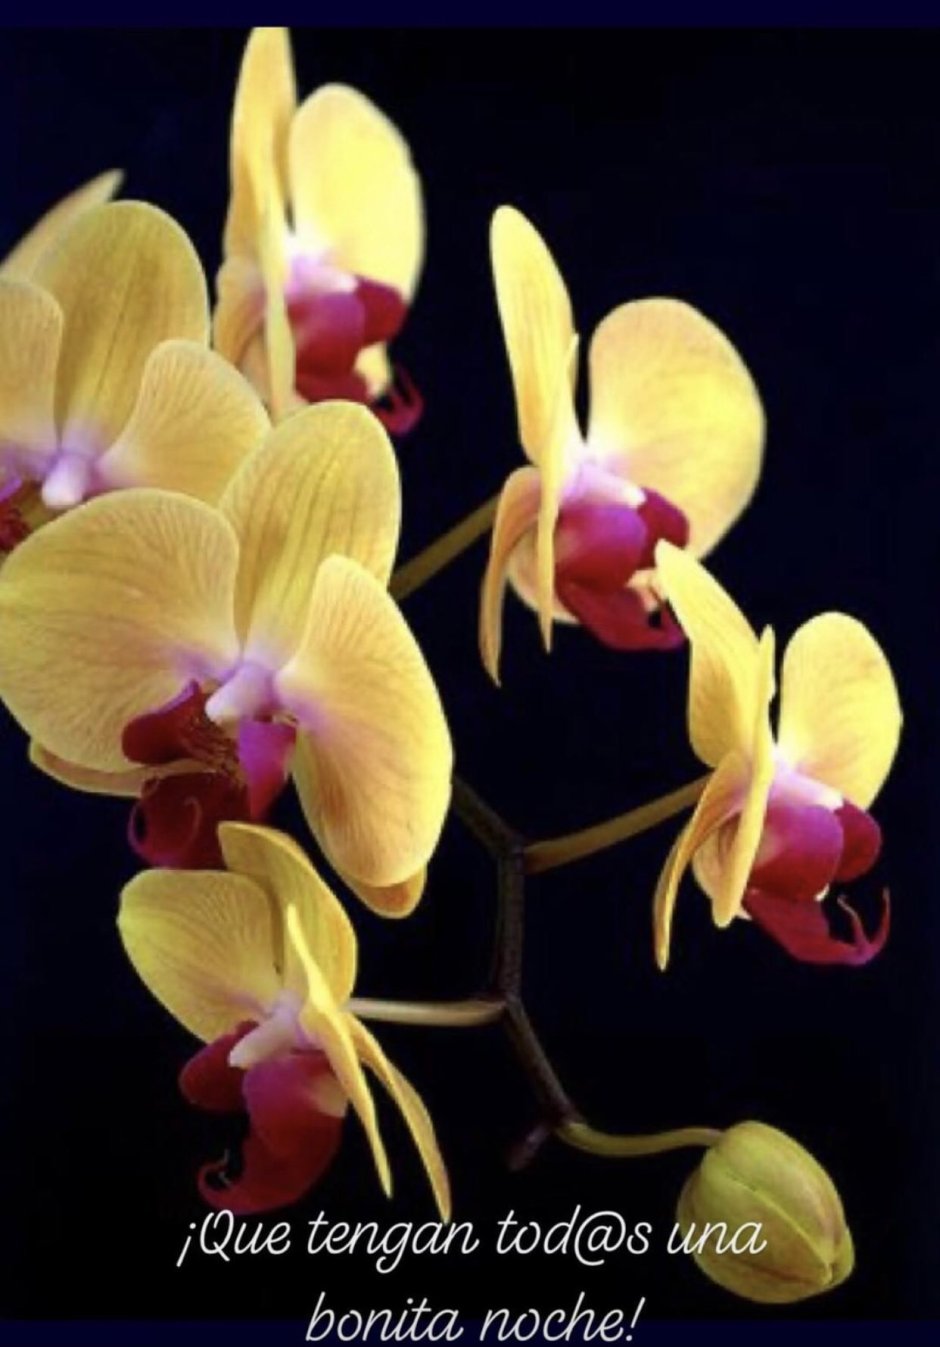 Орхидея фаленопсис Шанхай